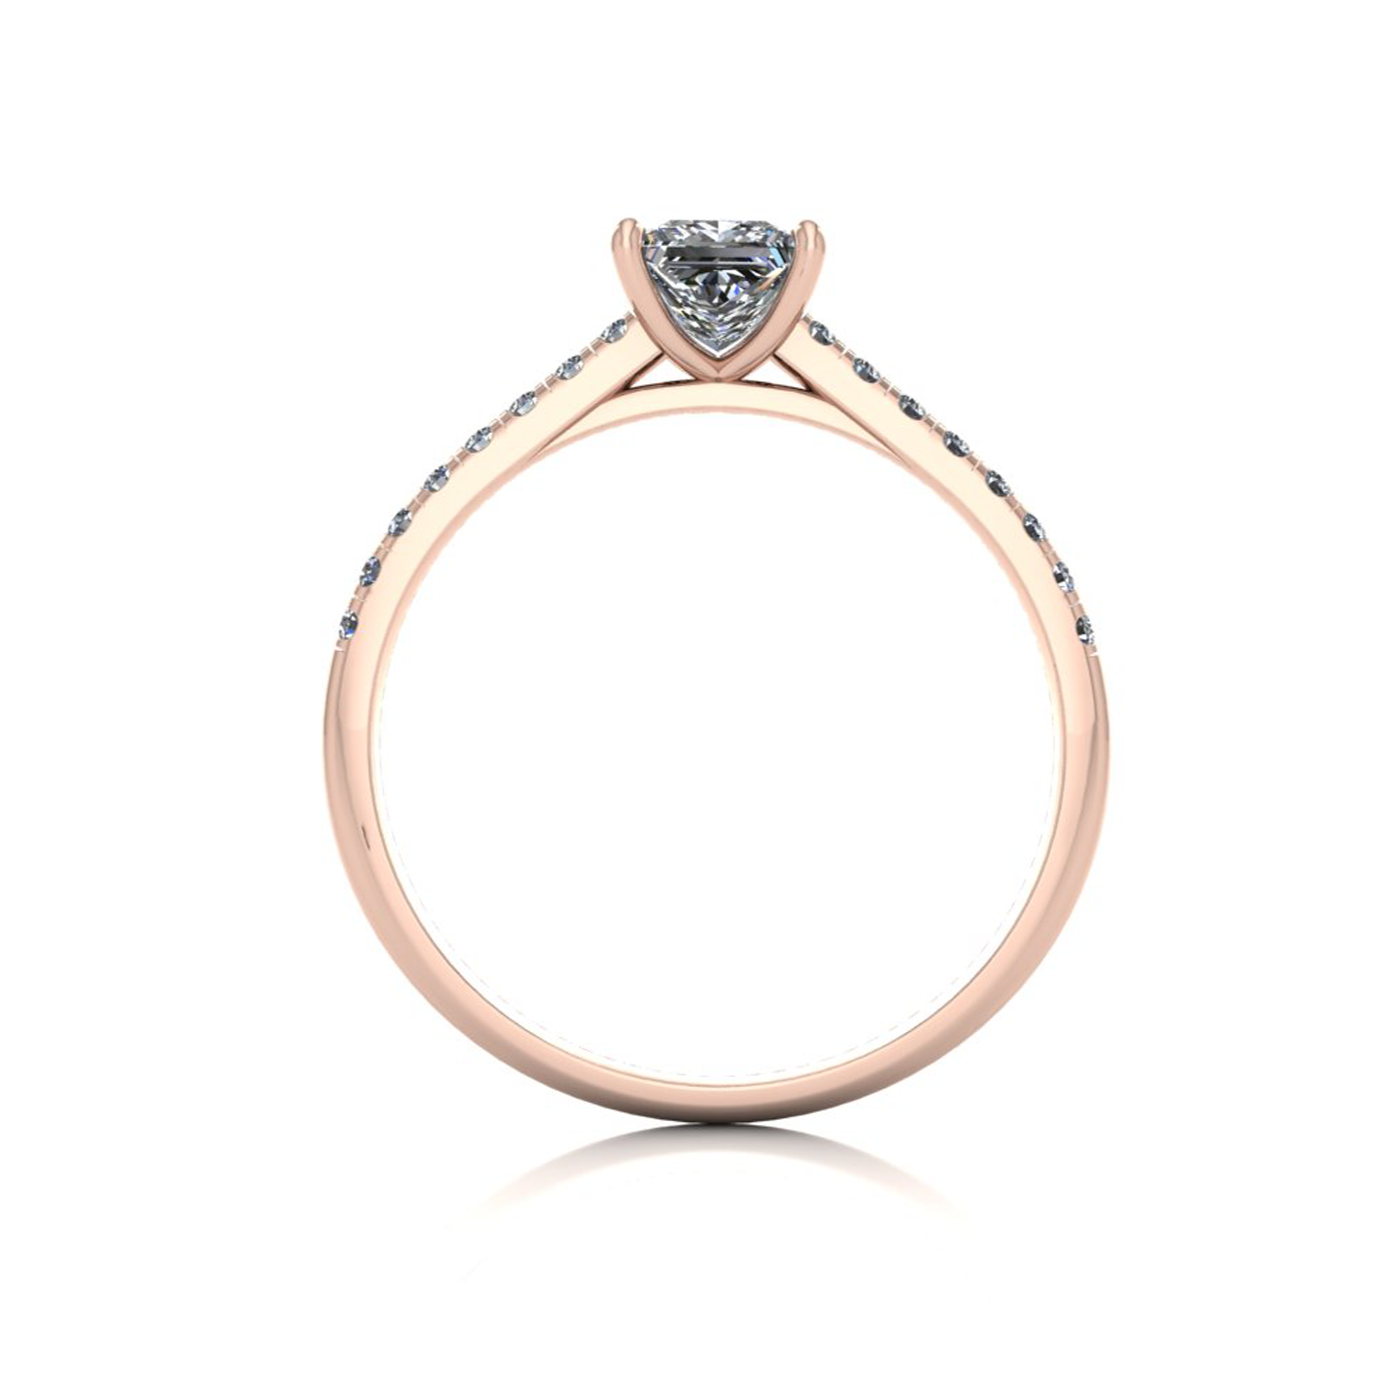 18k rose gold 0,50 ct 4 prongs princess cut diamond engagement ring with whisper thin pavÉ set band